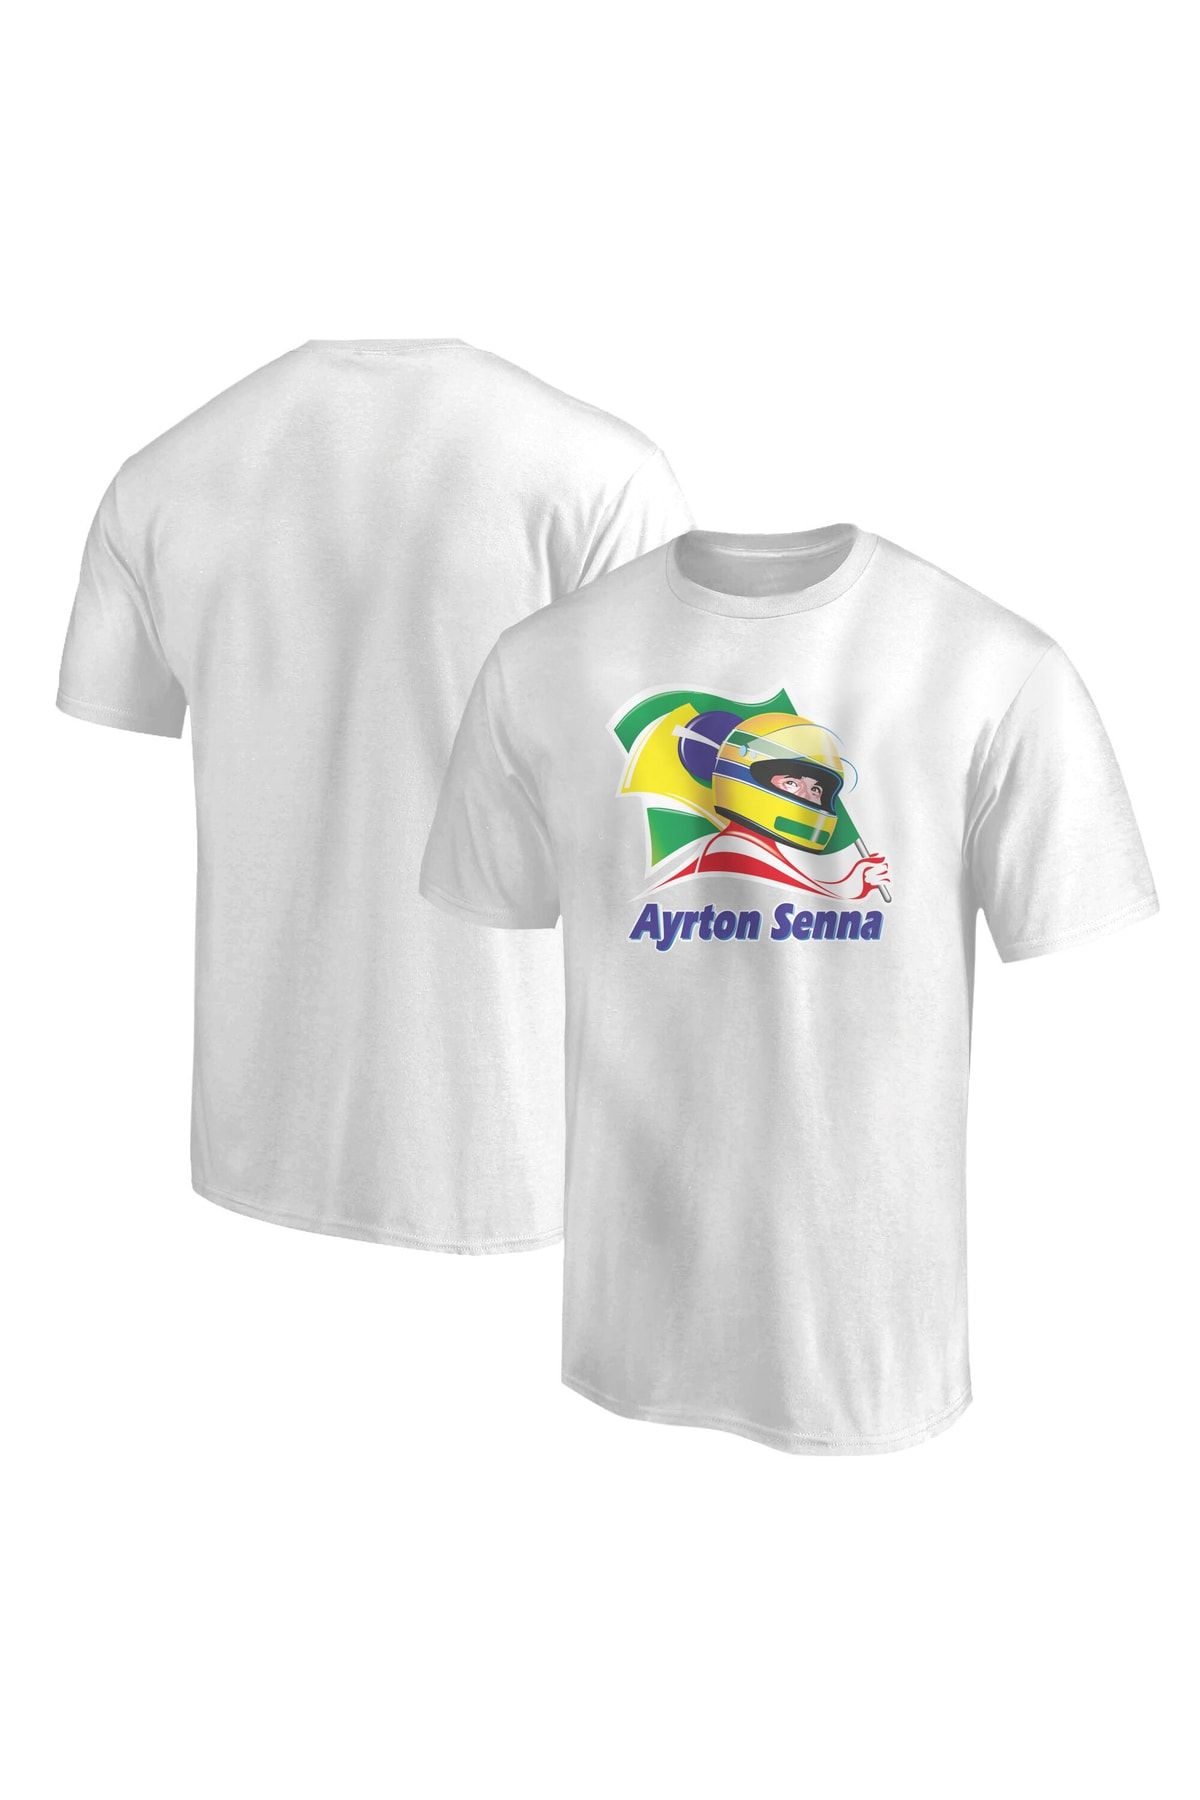 Usateamfans Ayrton Senna Tshirt